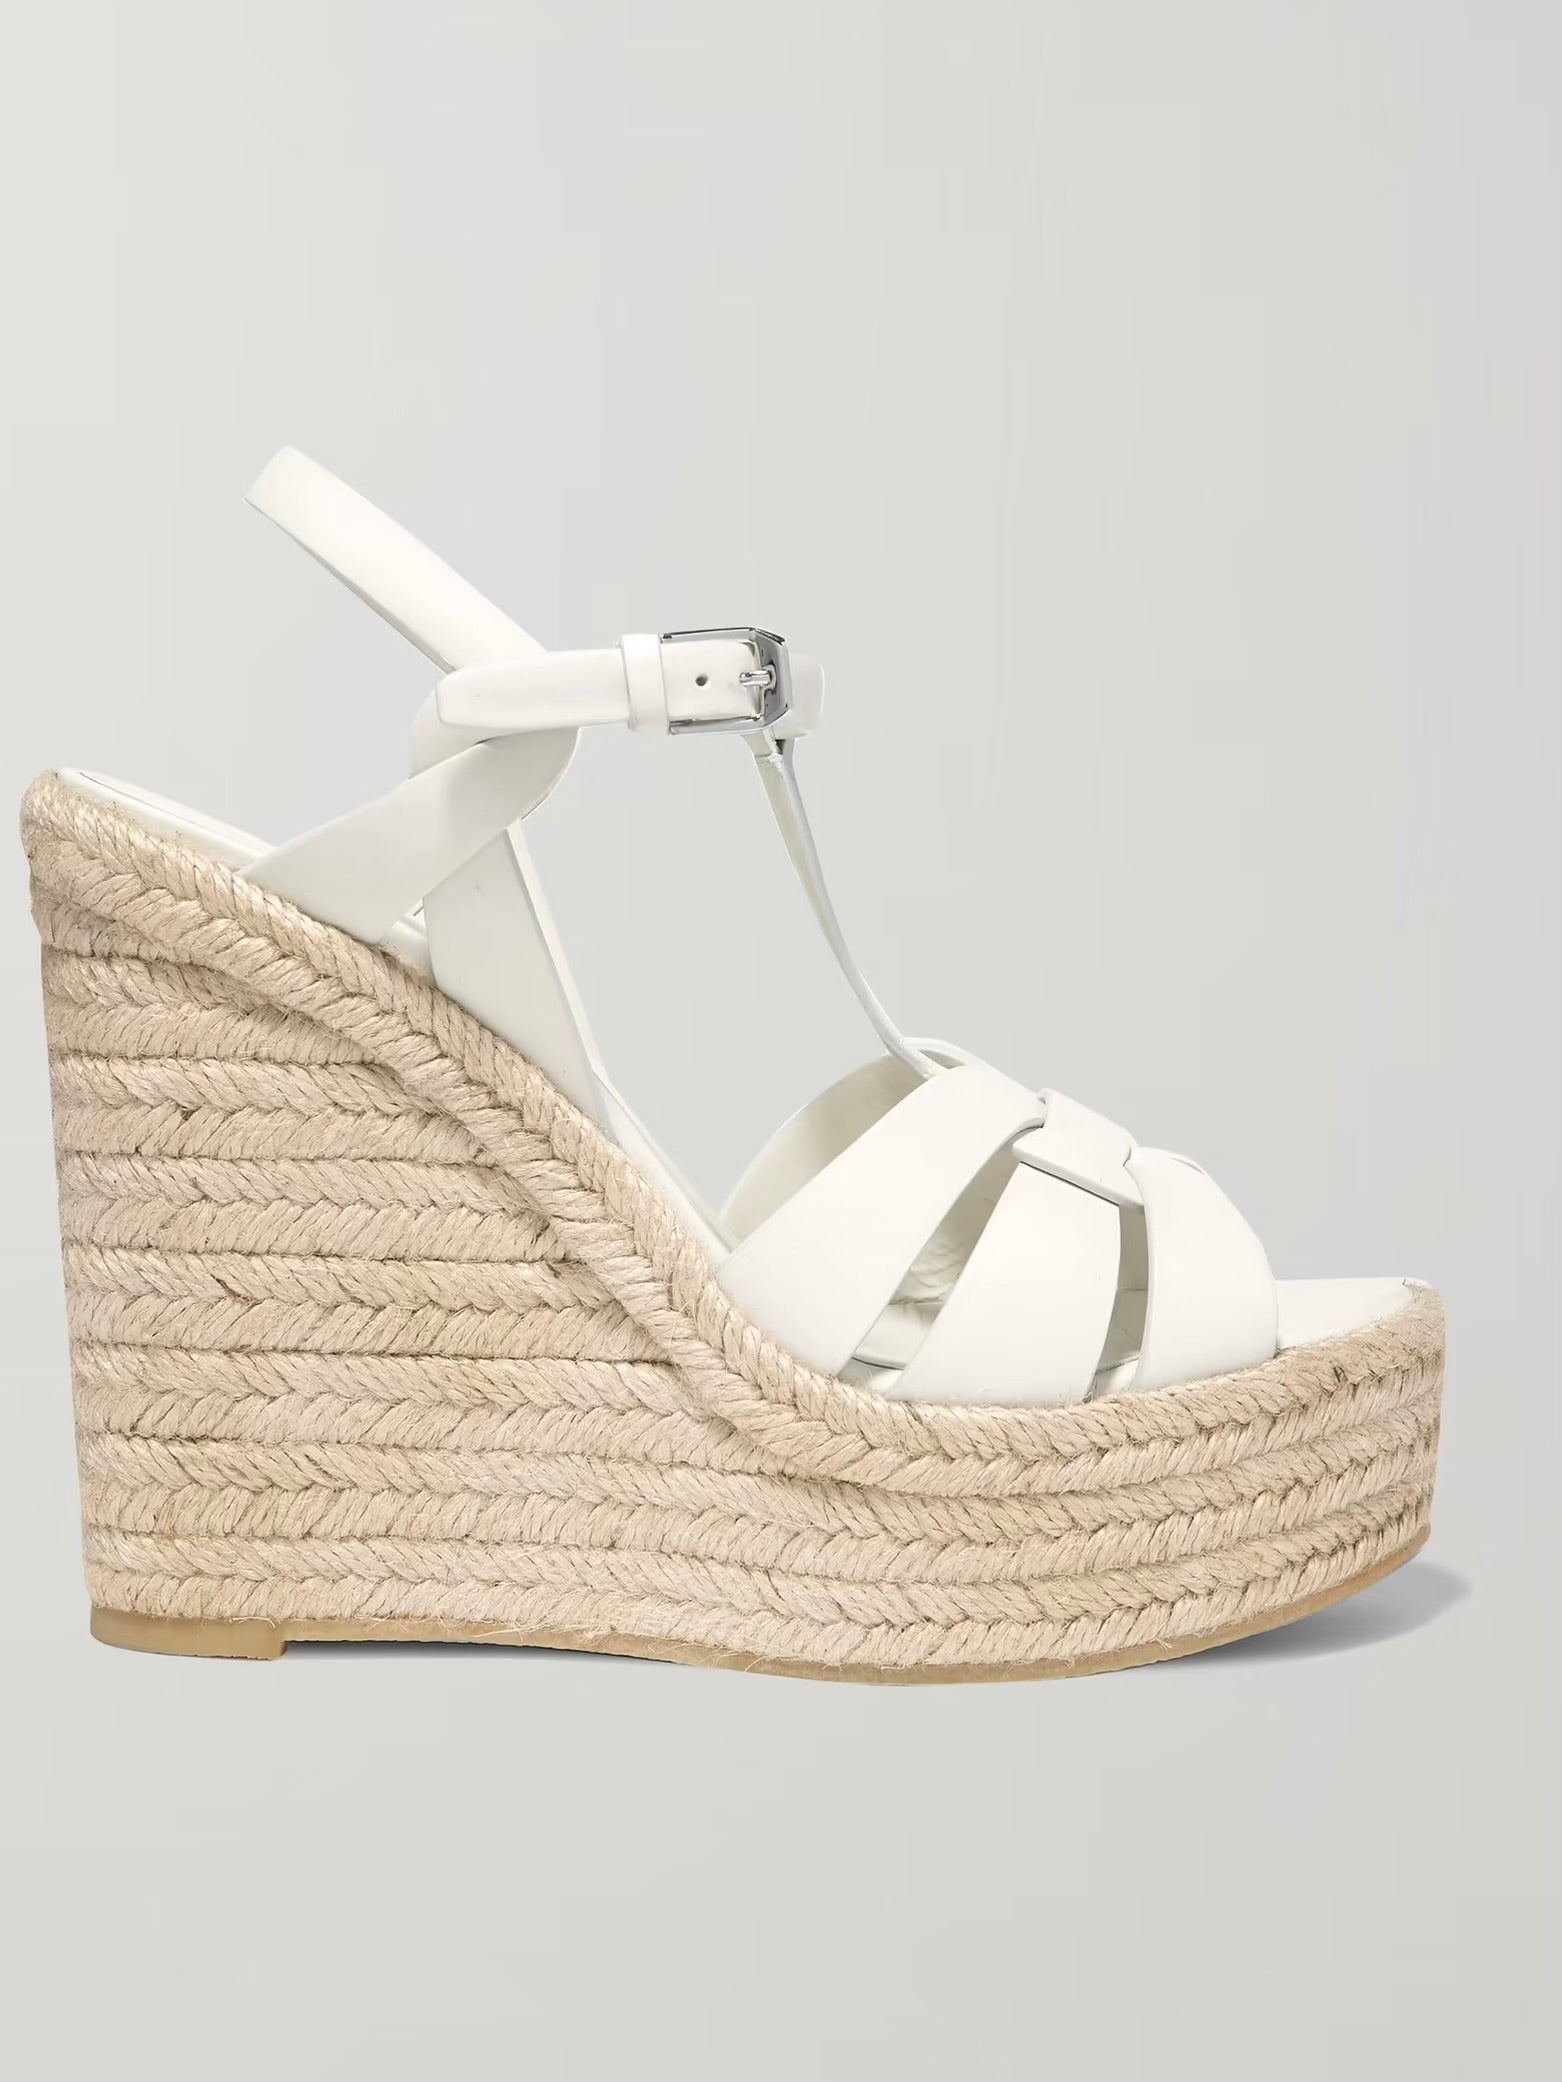 White wedge high heels sandals